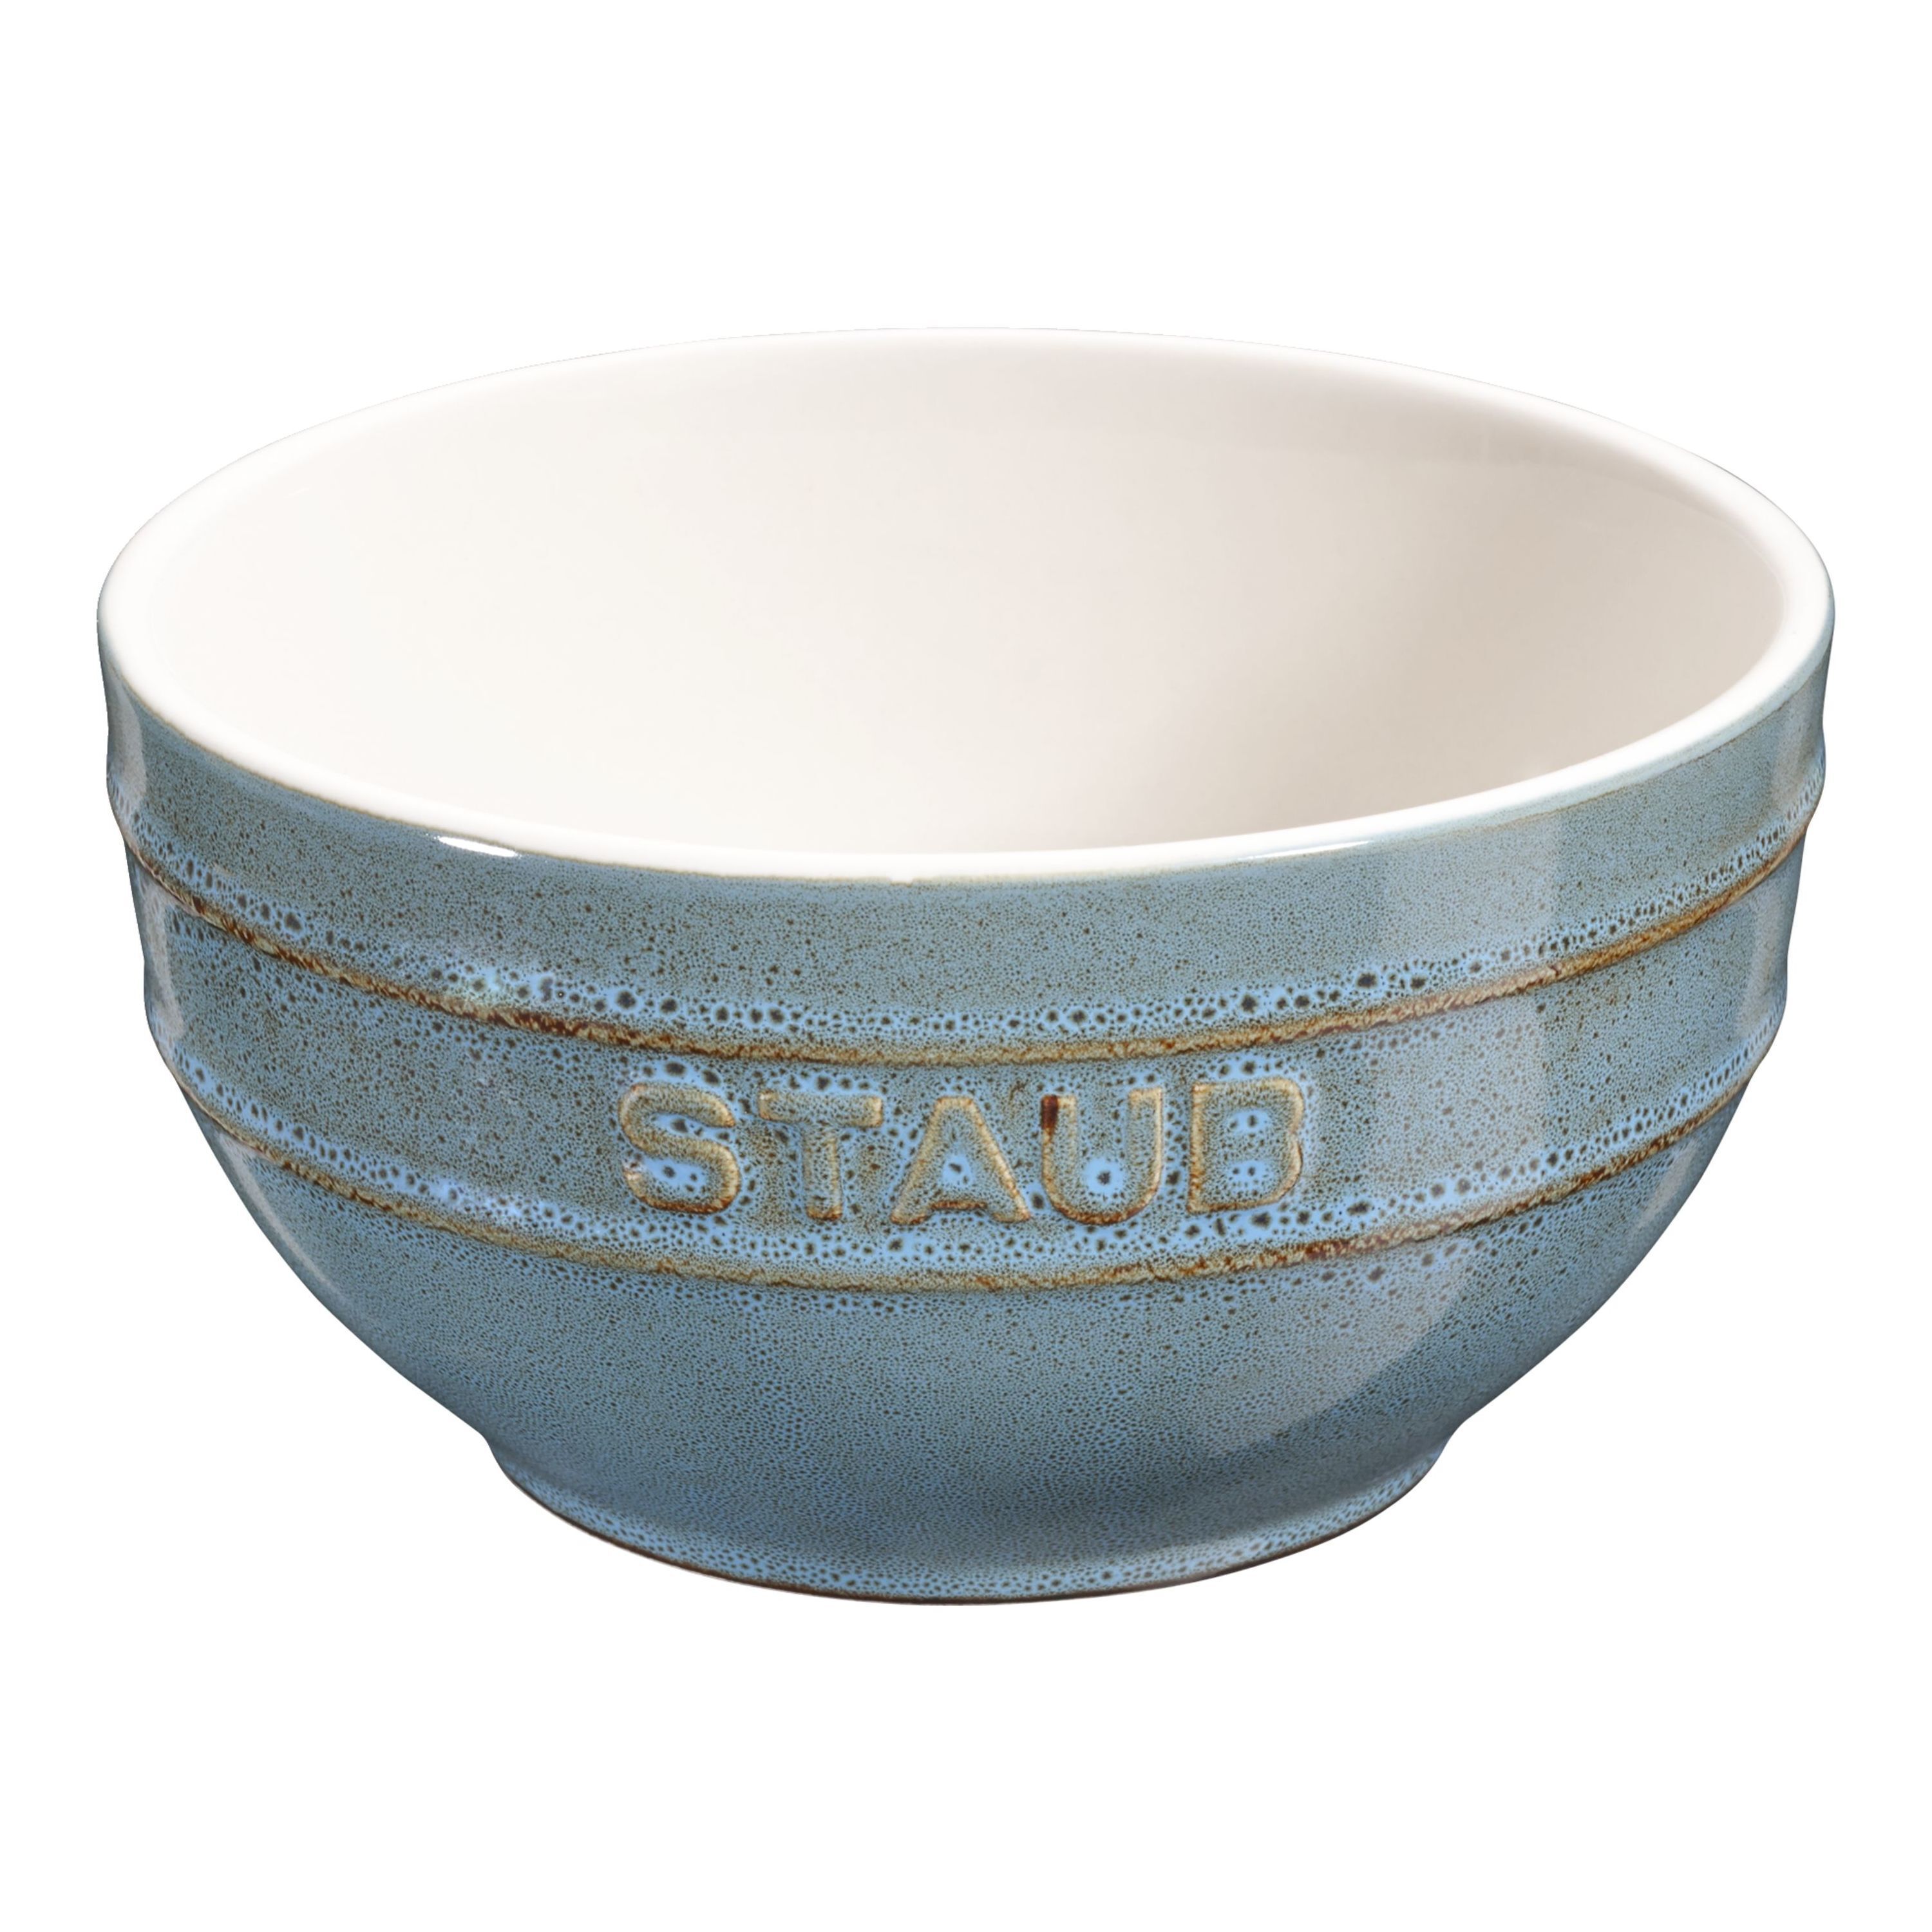 Staub Ceramique Ciotola rotonda - 14 cm, Colore turchese antico